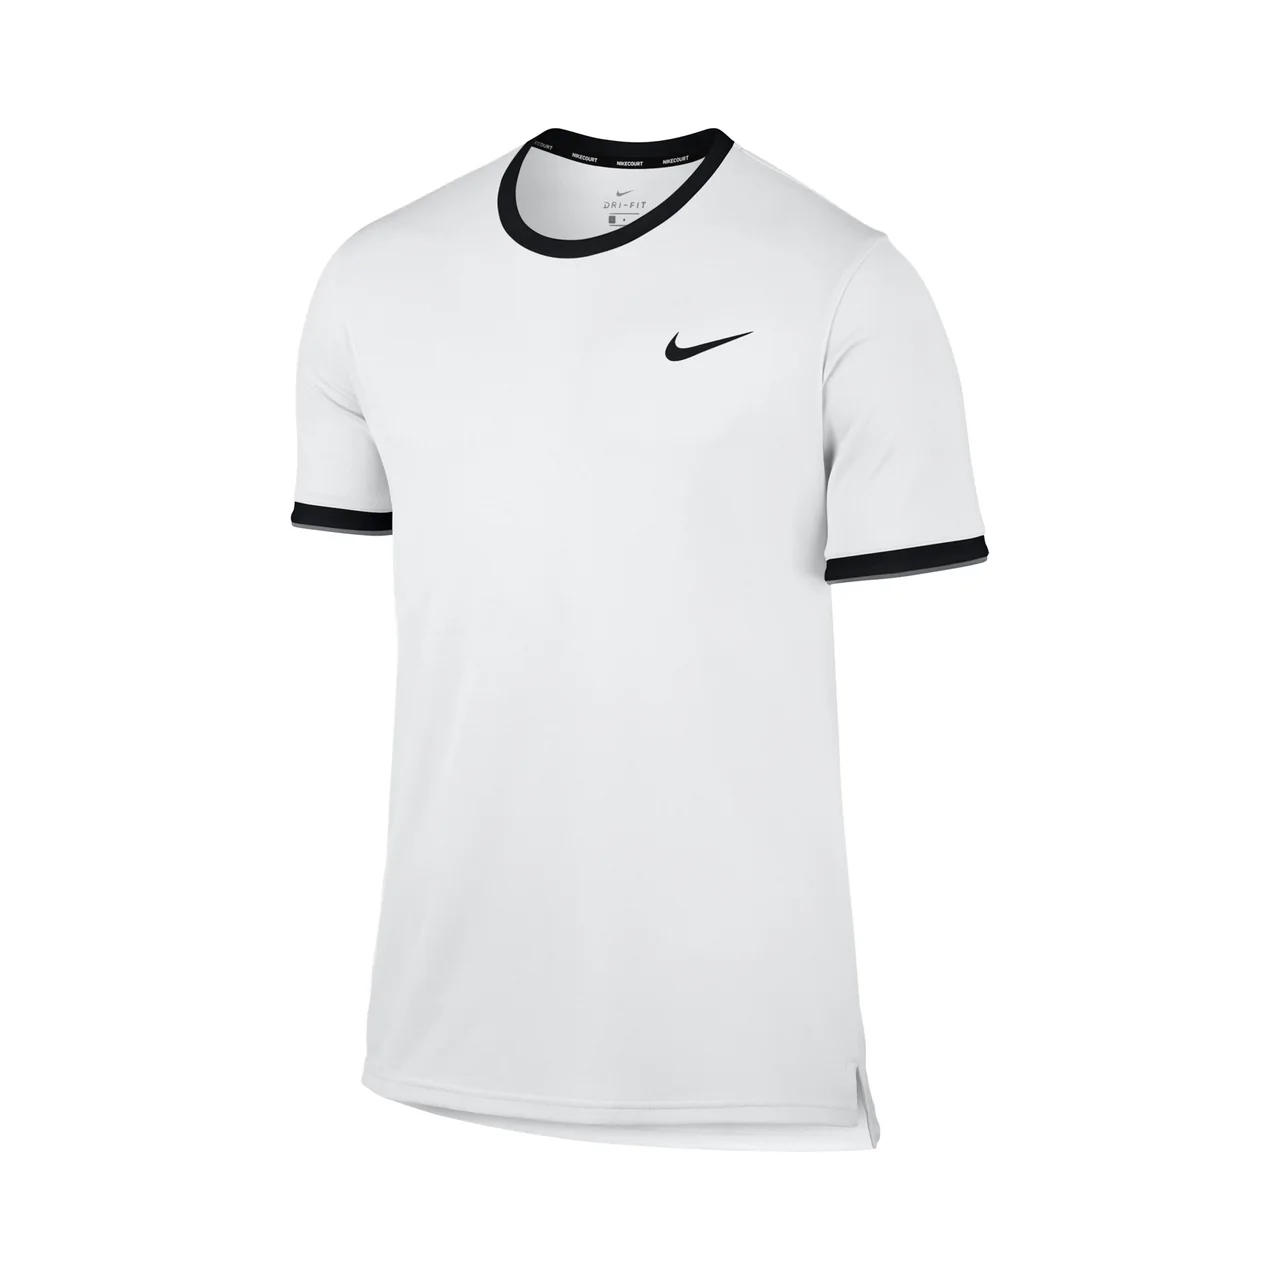 Nike Dry Top Team White/Black